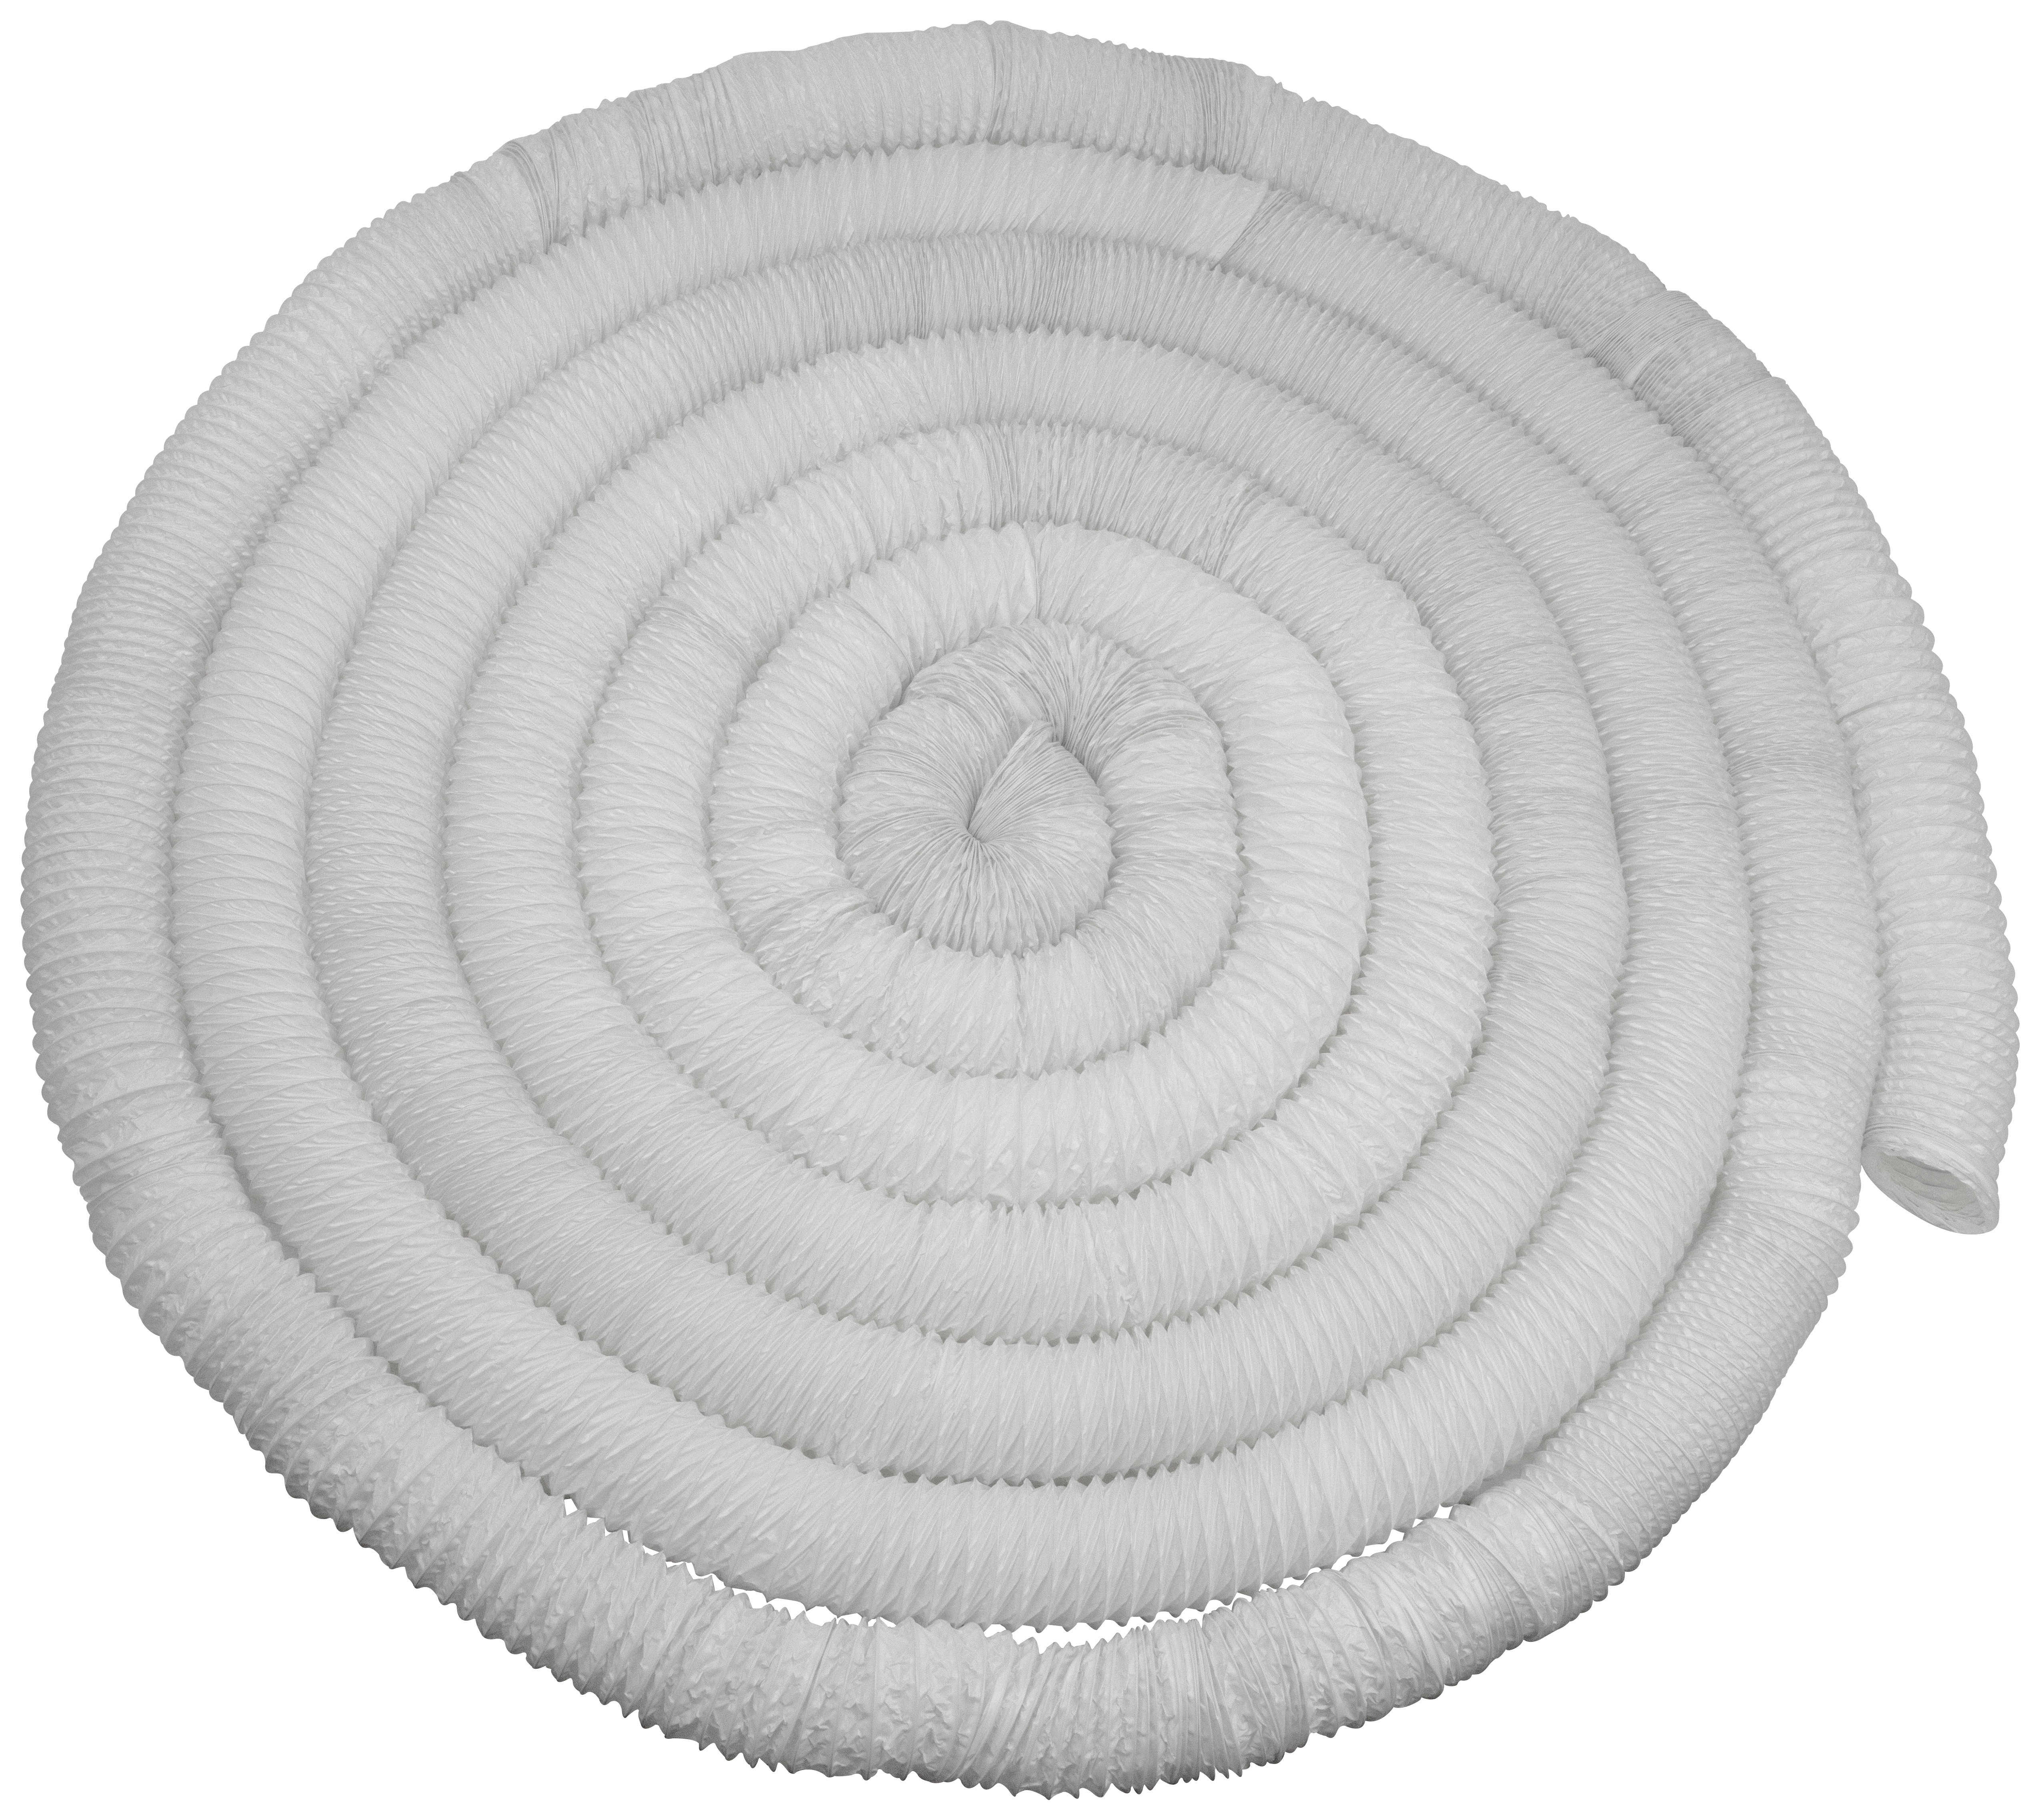 Image of Manrose White Flexible Ducting - 100mm x 45m